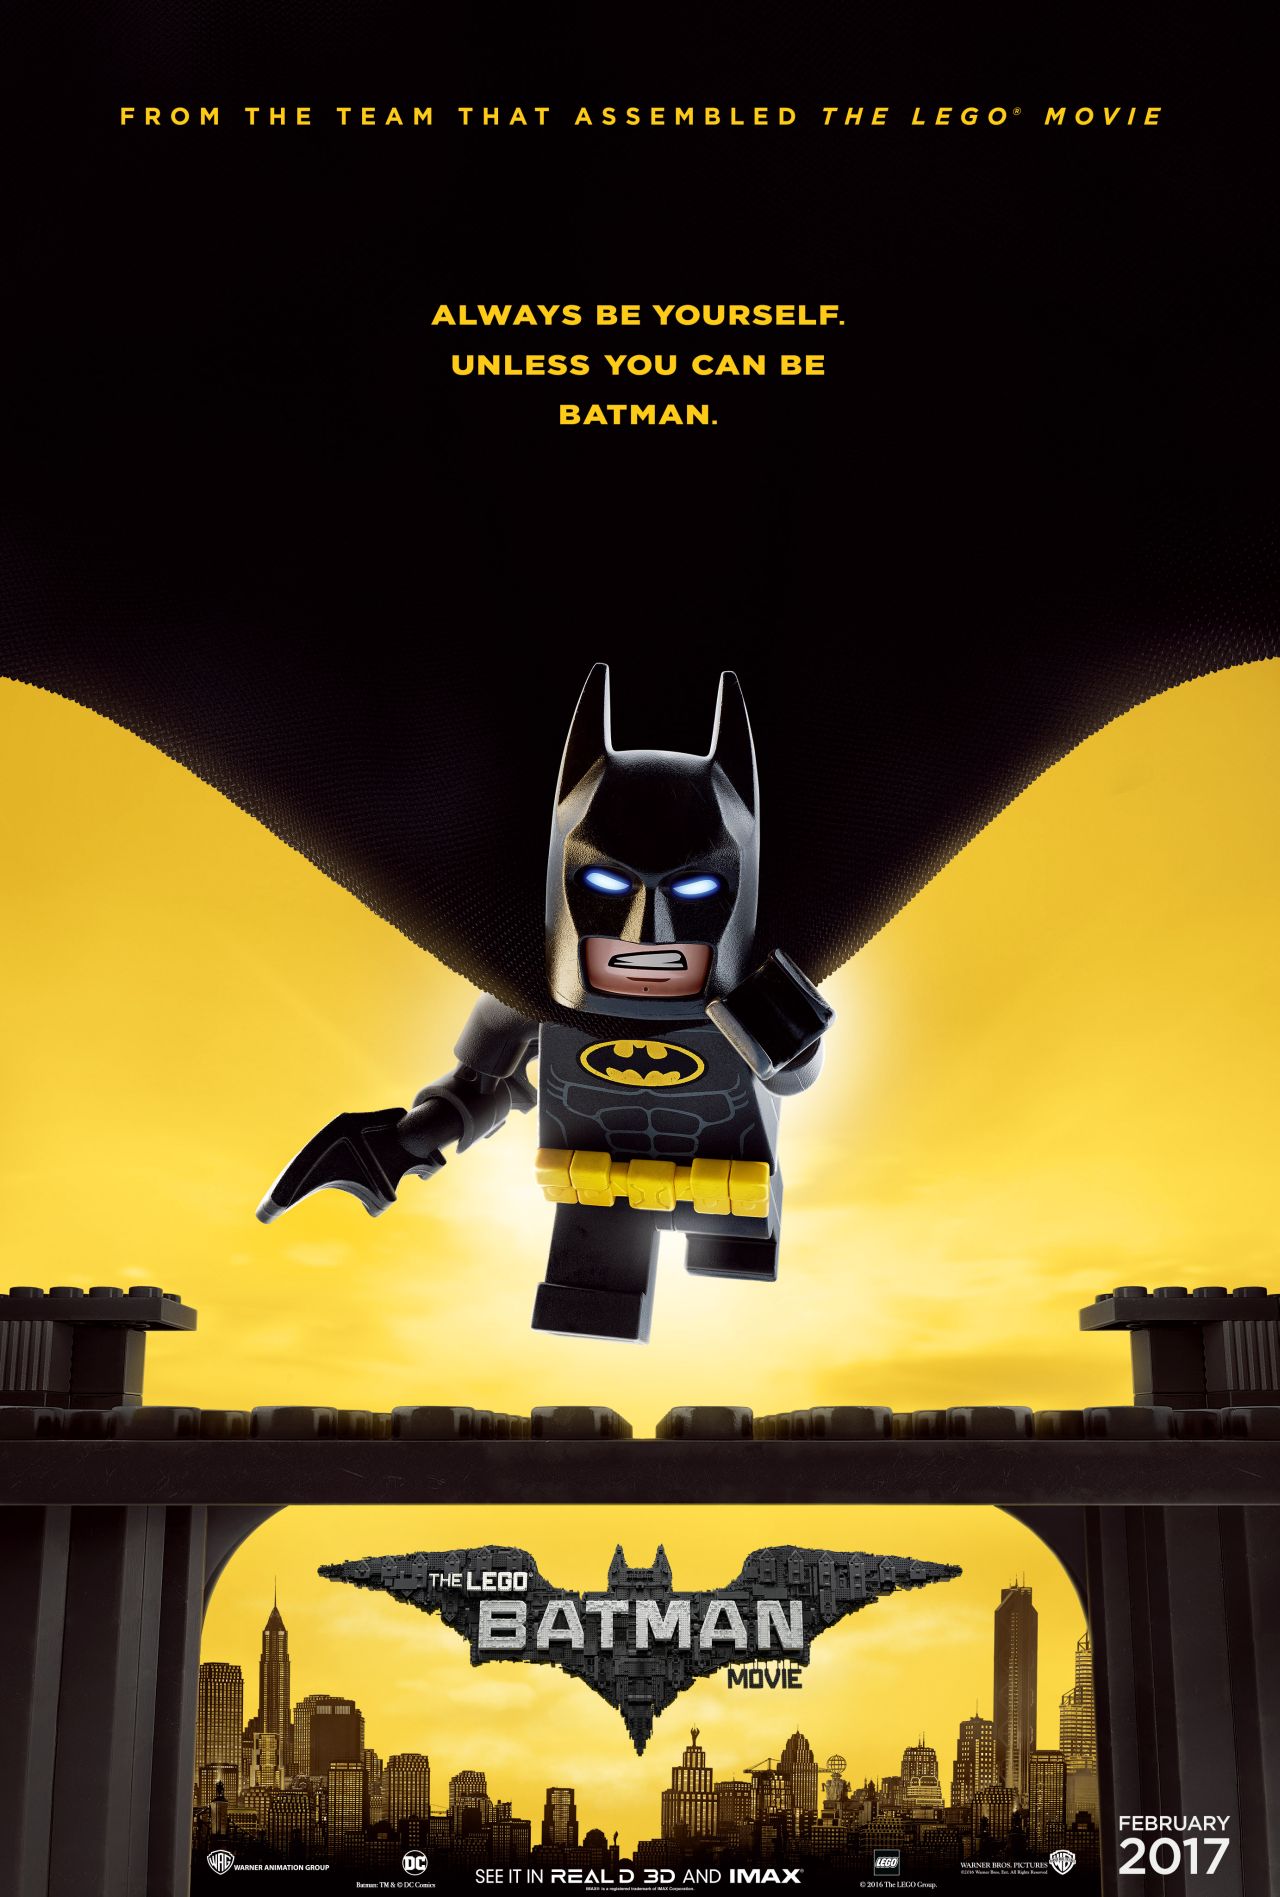 The Lego Batman Movie #3